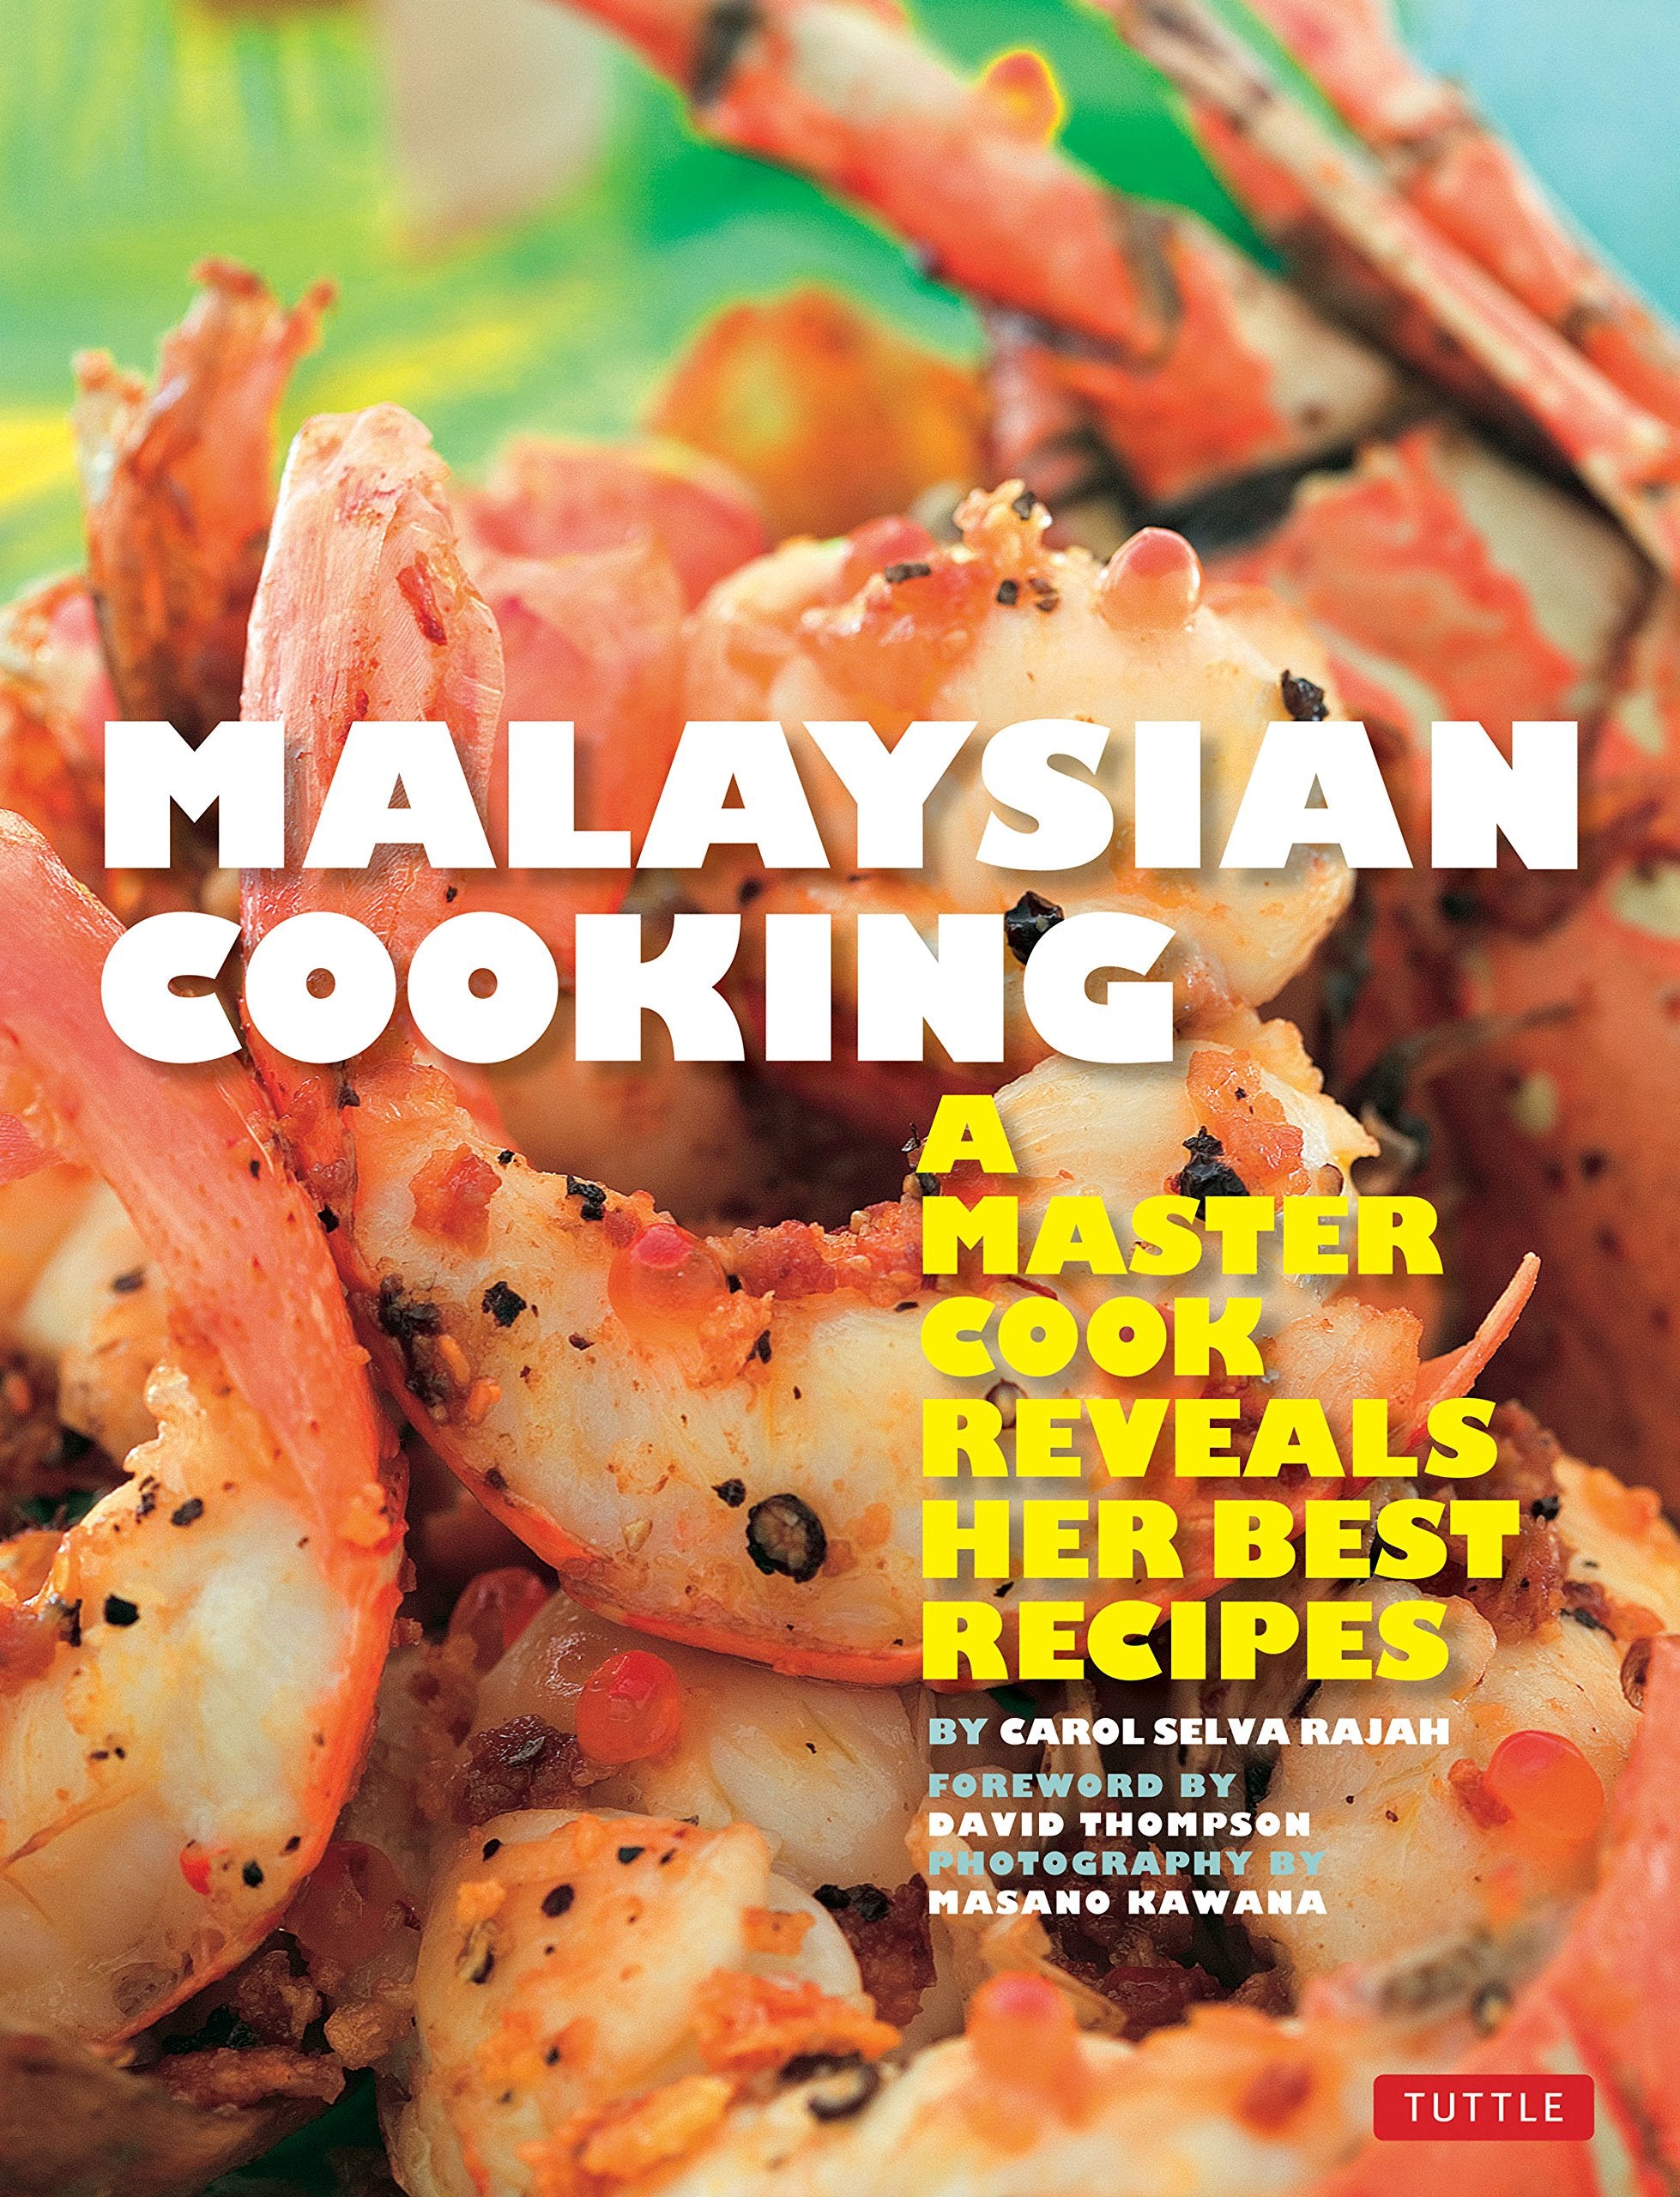 Malaysian Cooking: A Master Cook Reveals Her Best Recipes (Carol Selva Rajah)